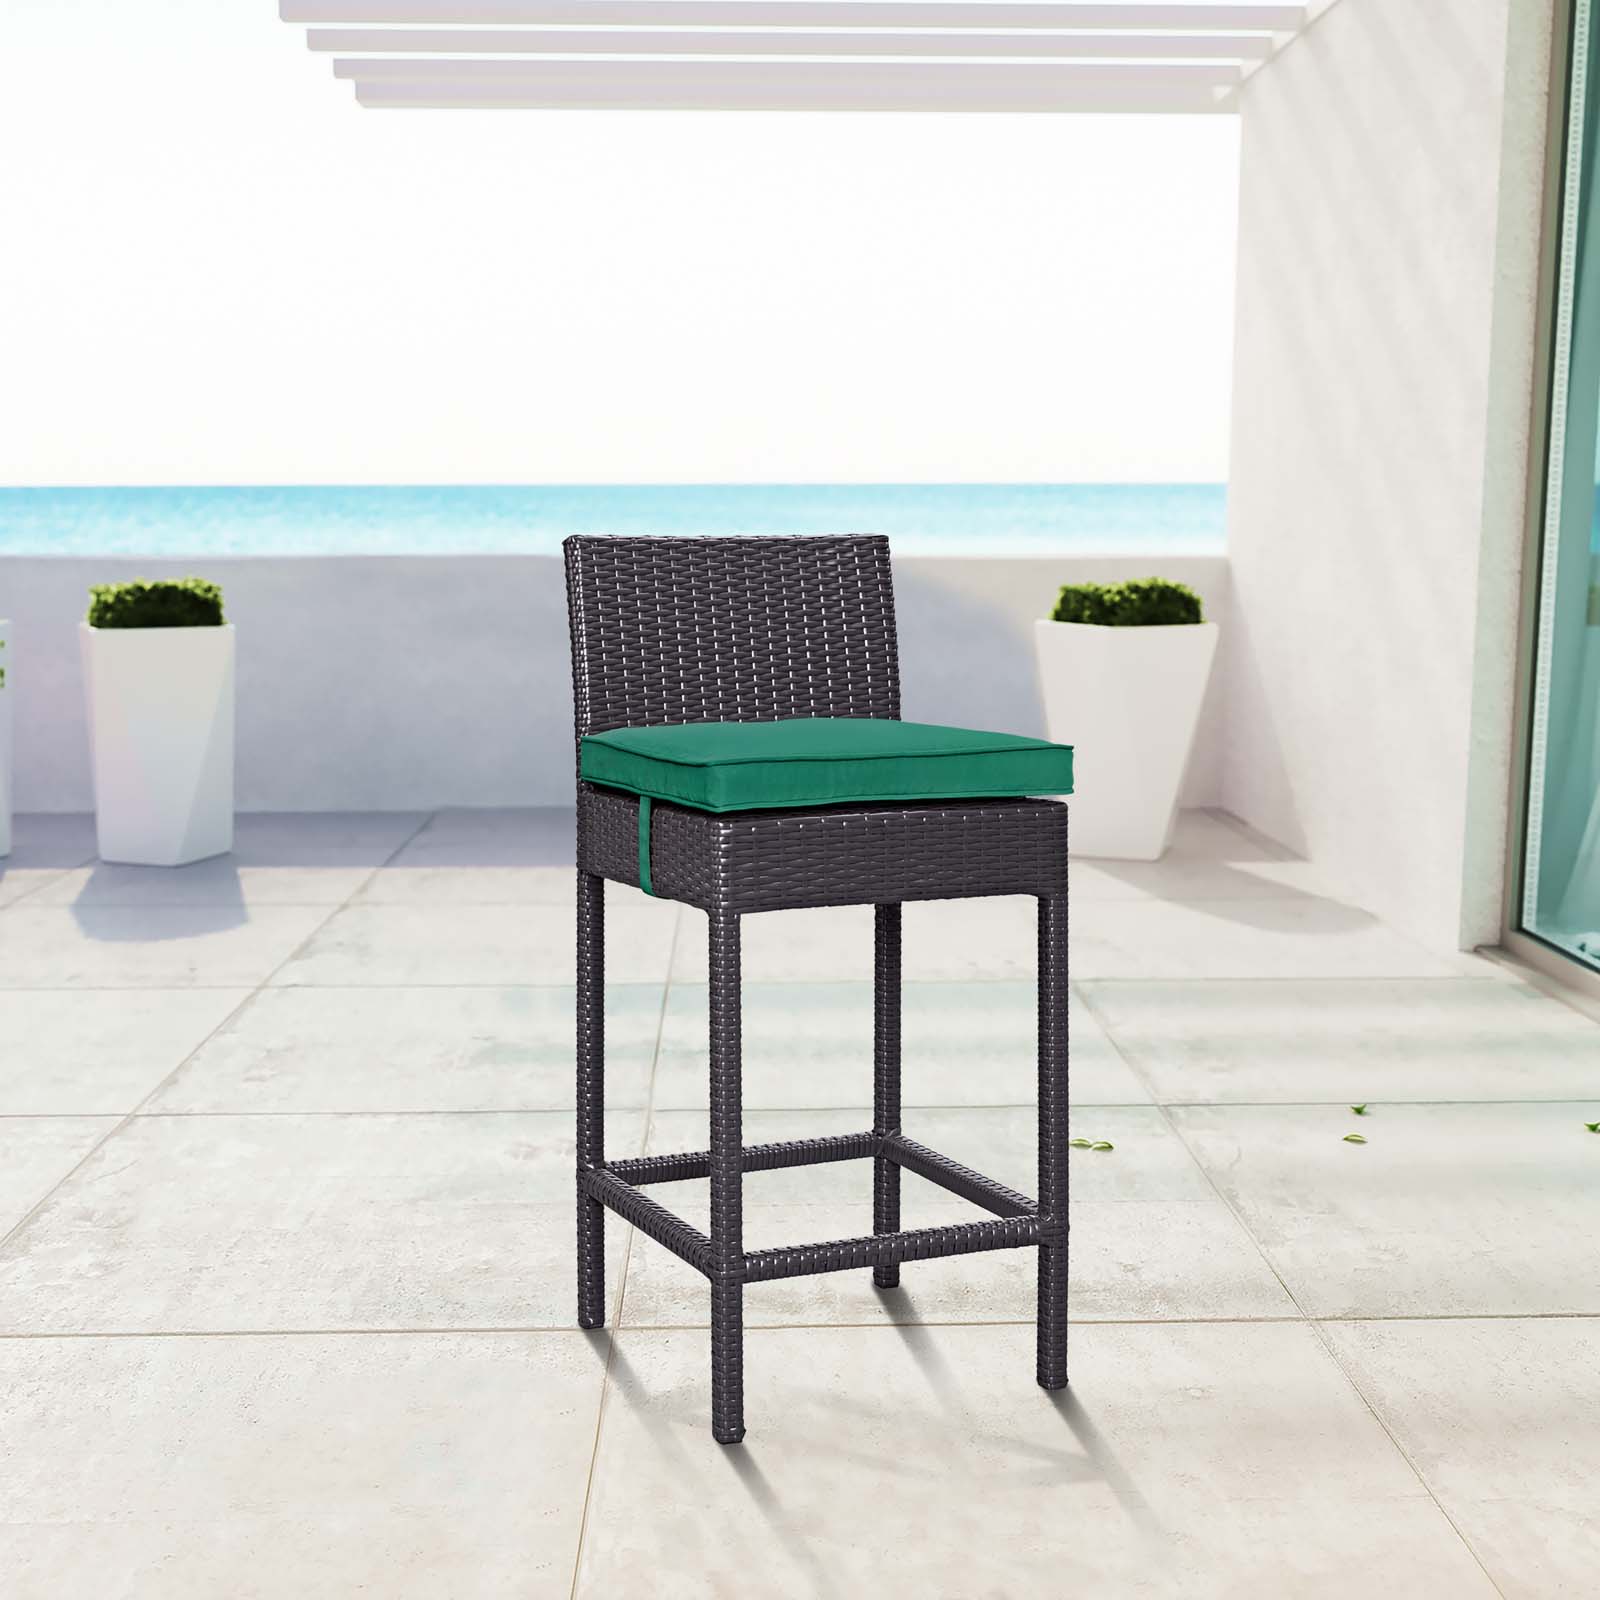 Modern Contemporary Urban Design Outdoor Patio Balcony Garden Furniture Bar Side Stool Chair, Rattan Wicker, Green - image 2 of 2